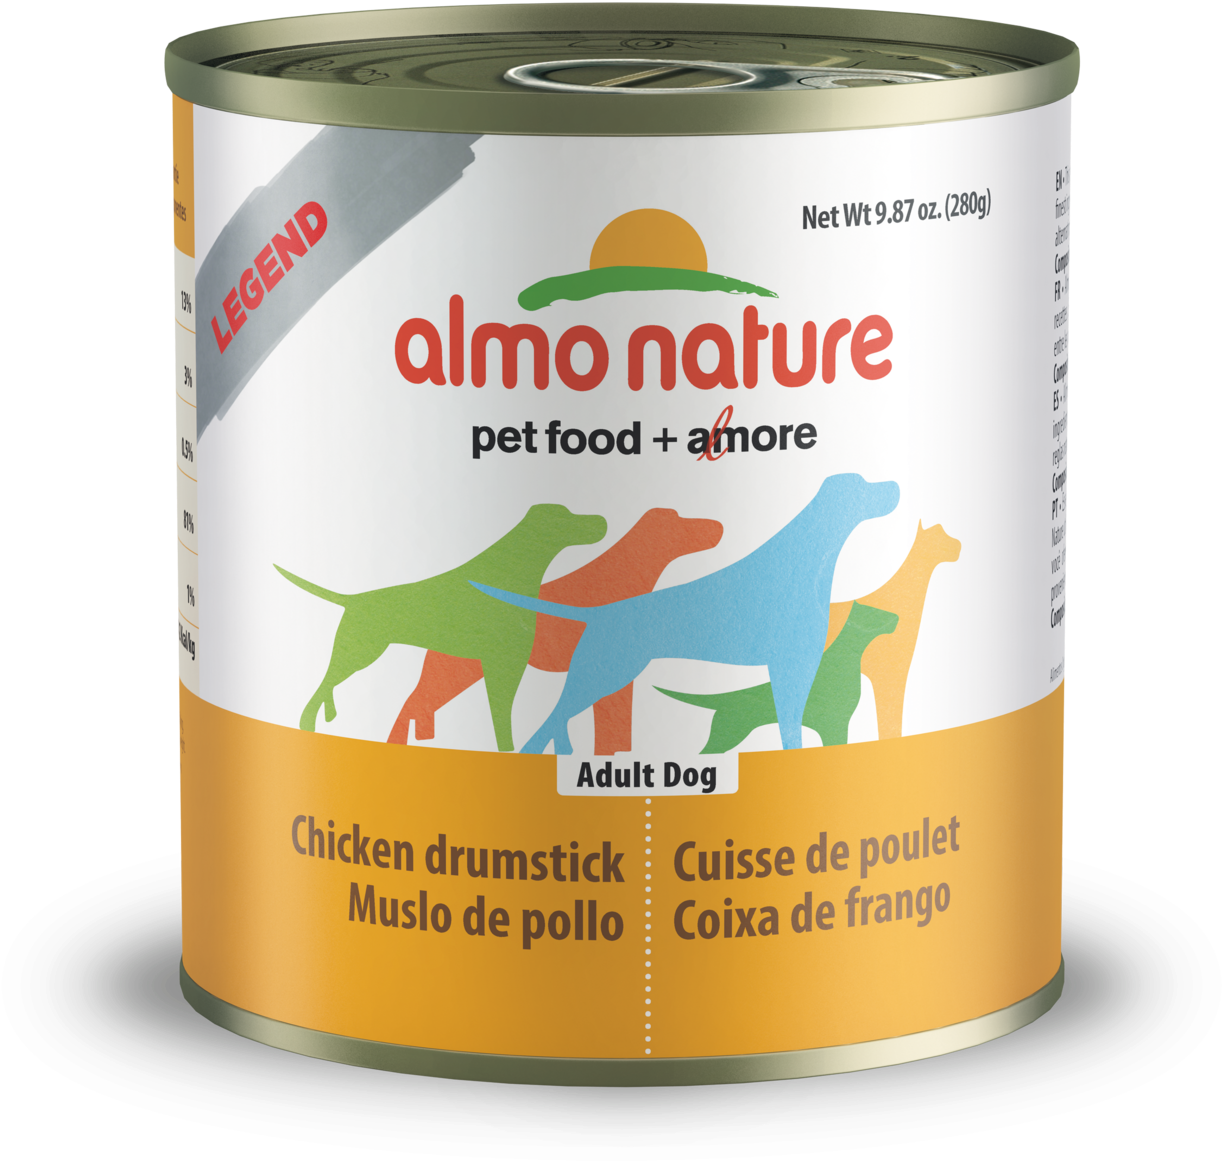 Almo Nature Dog Hqs Legend Chicken Drumstick 12 Cans - Almo Nature Legend Dog Food - Chicken Drumstick (1400x1358), Png Download